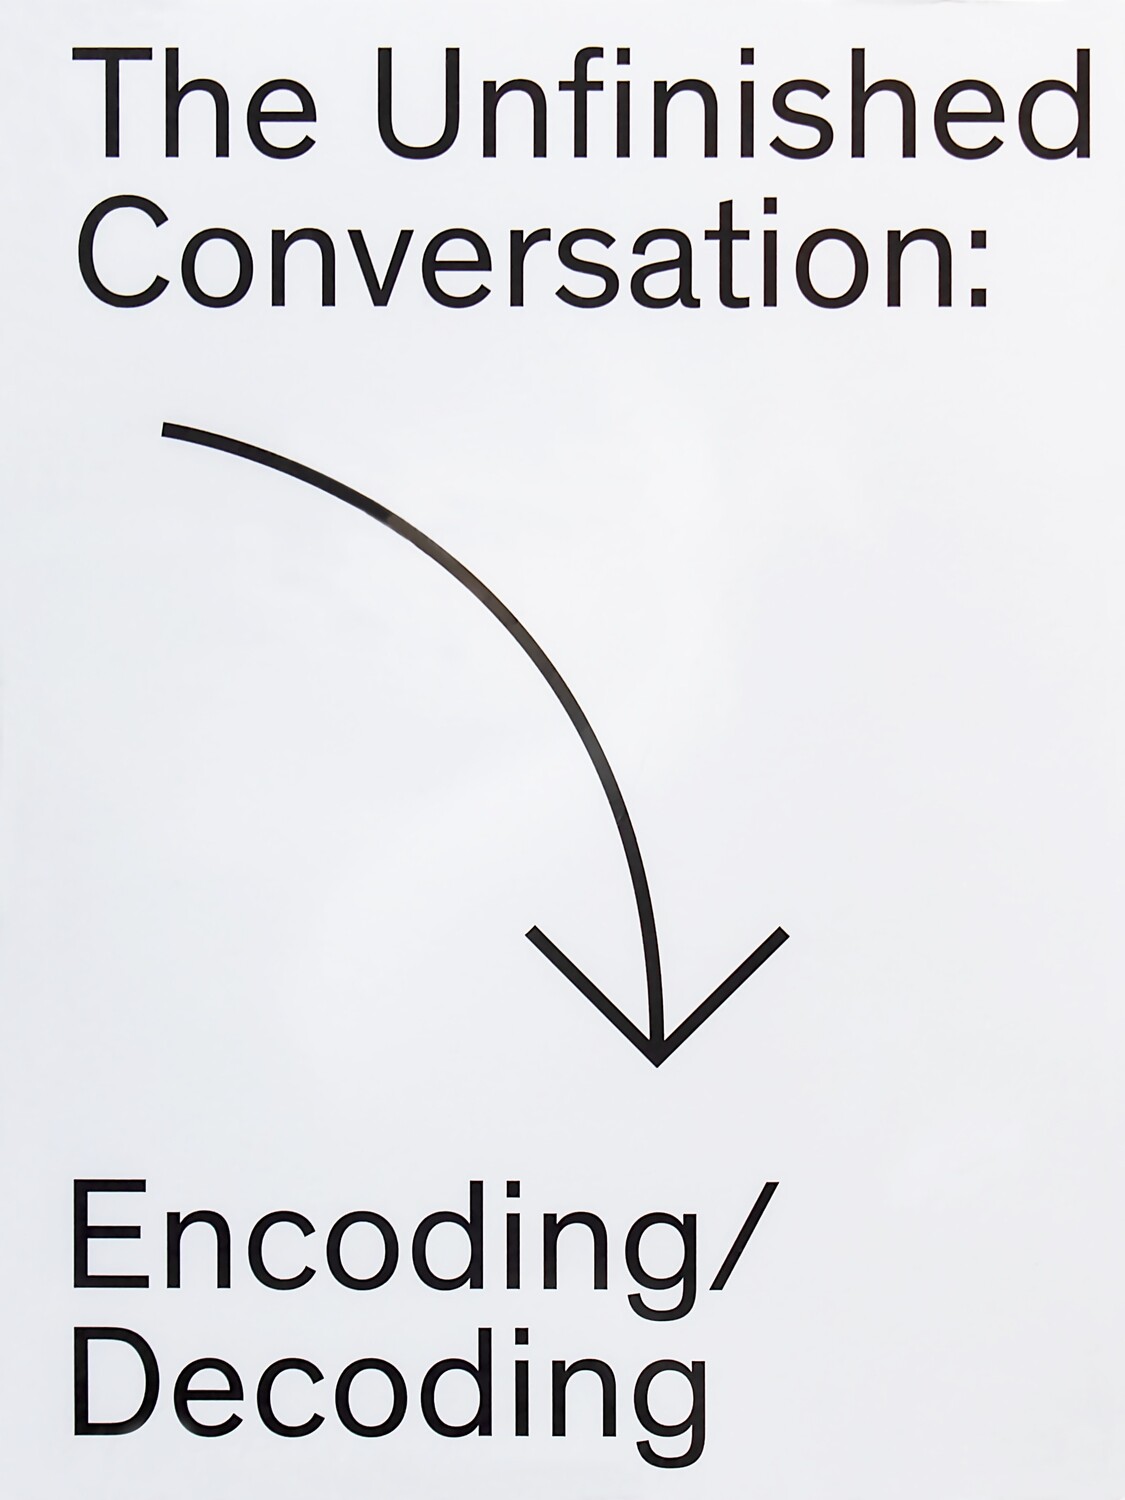 The Unfinished Conversation: Encoding/Decoding